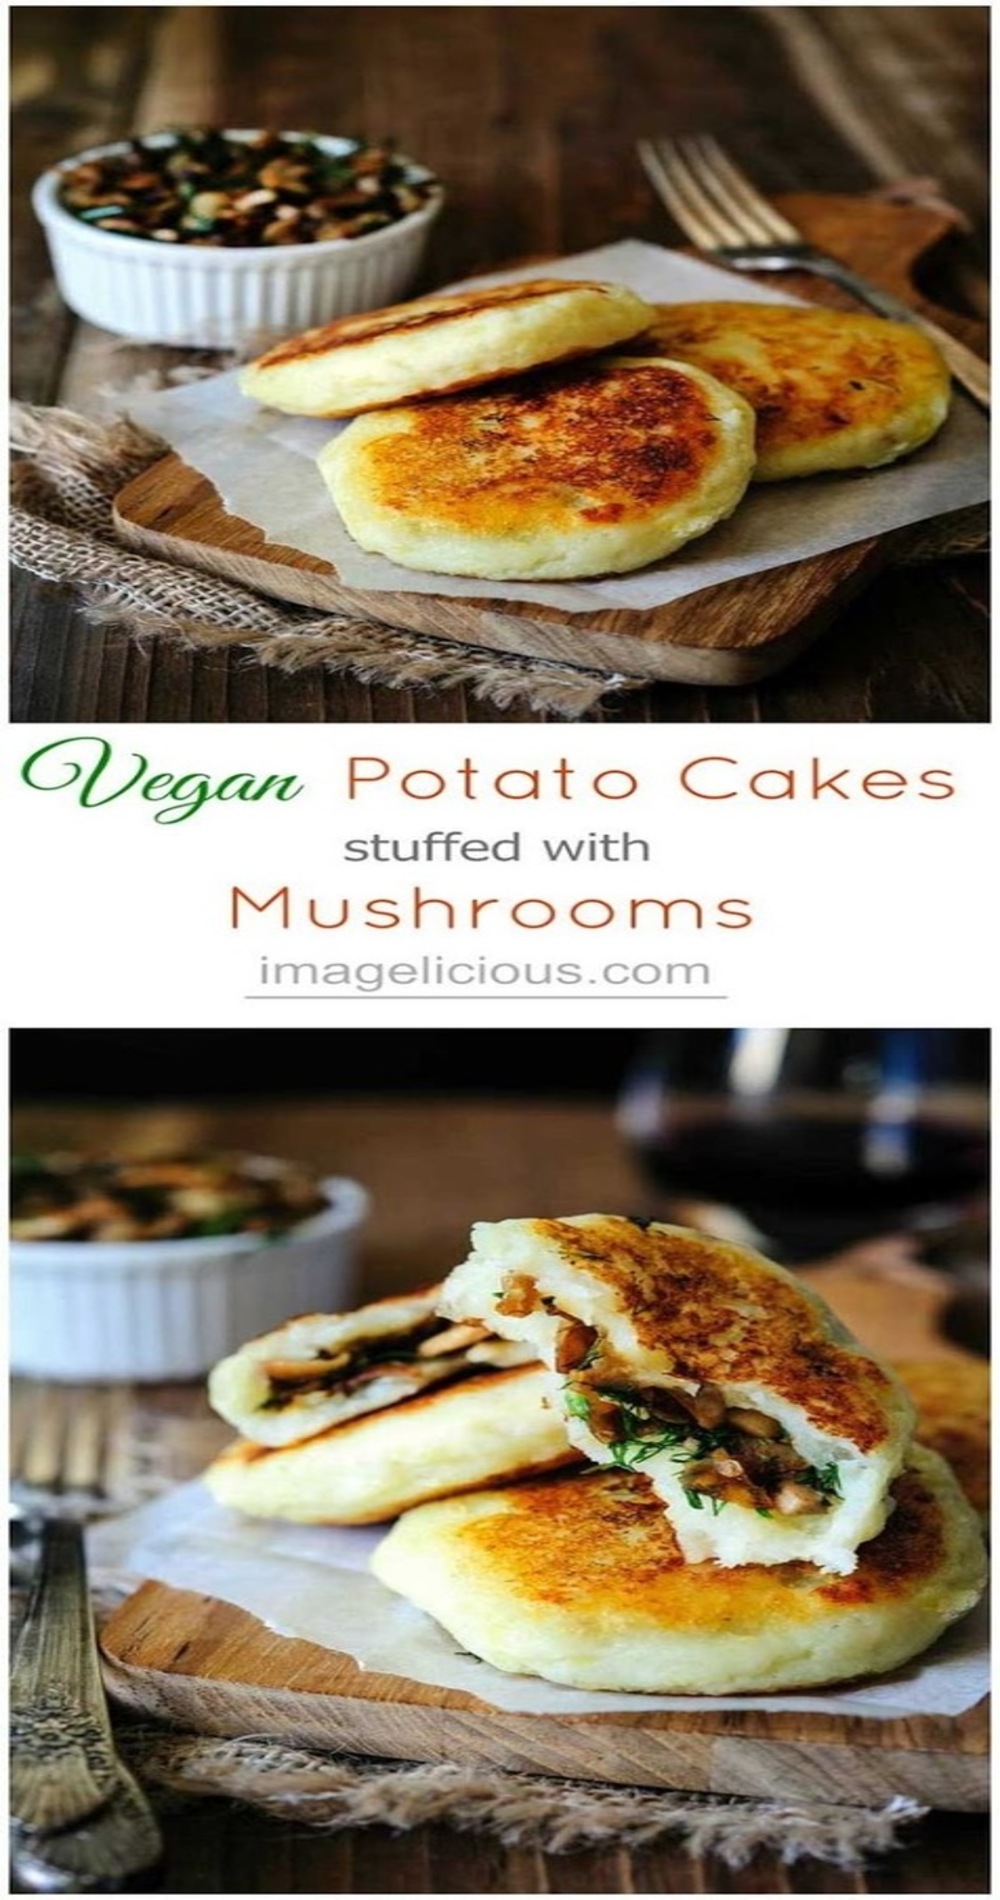 Vegan Potato Cakes stuffed with Mushrooms